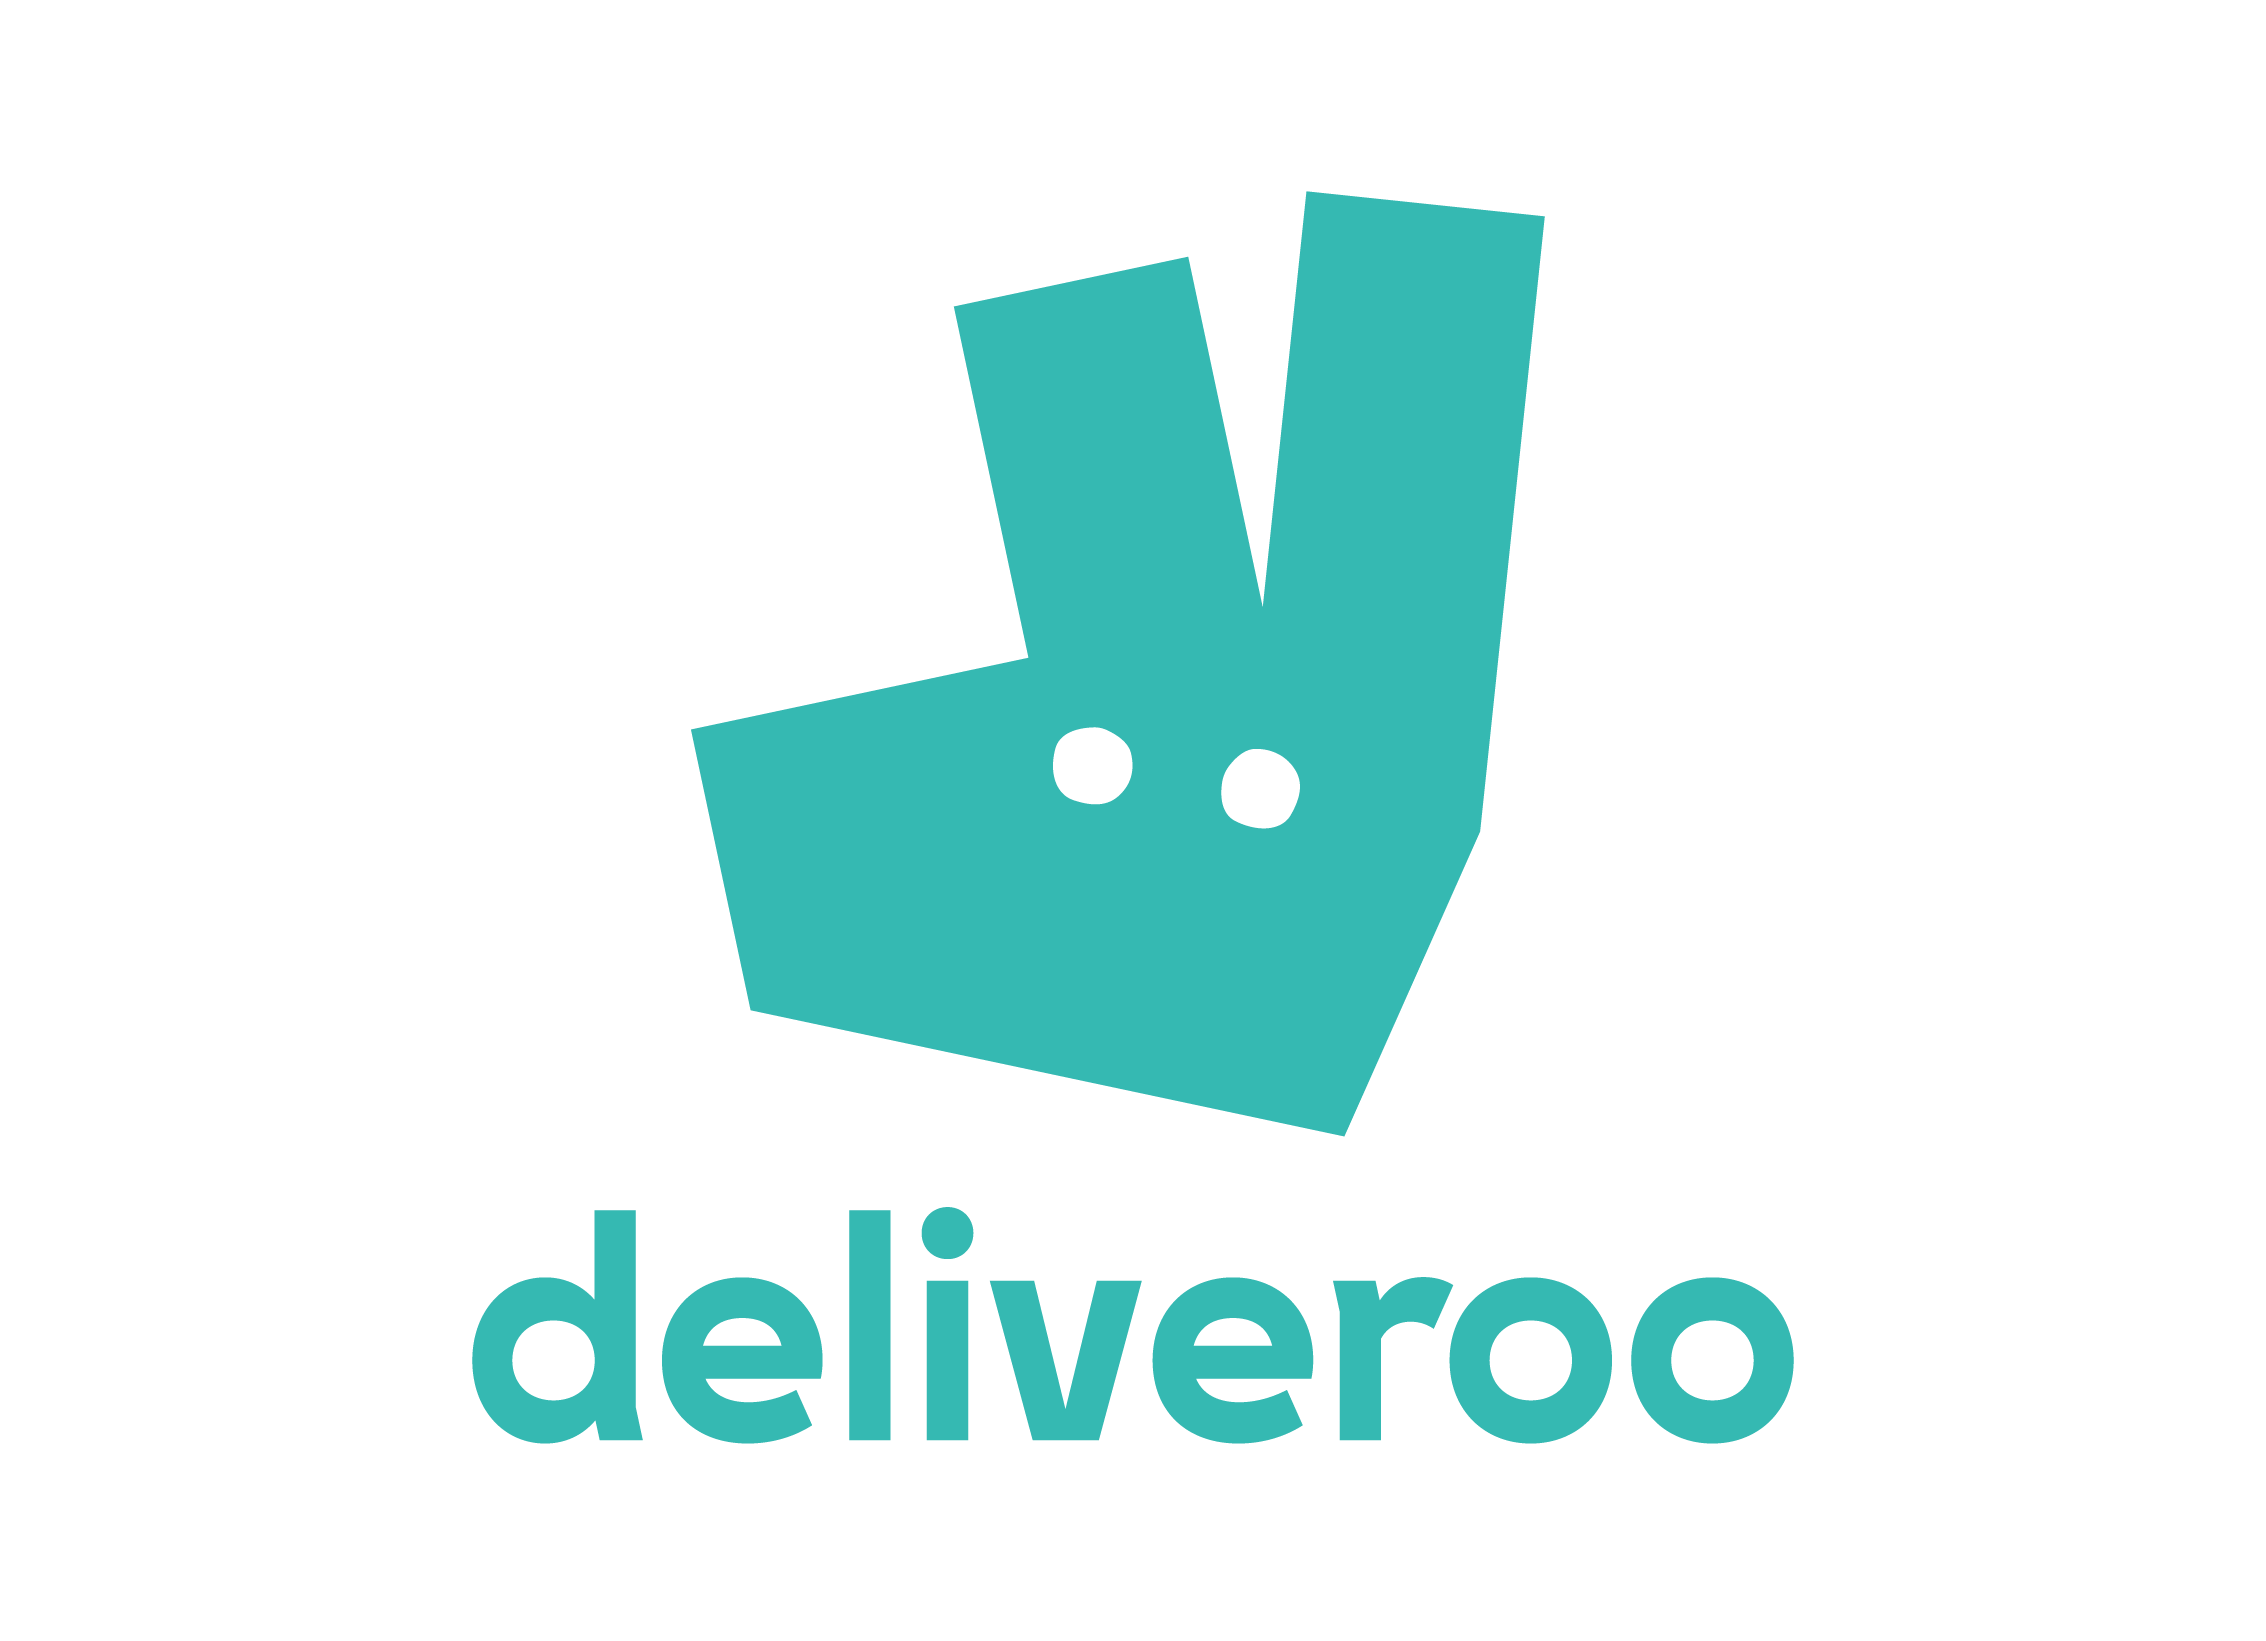 Deliveroo2.png